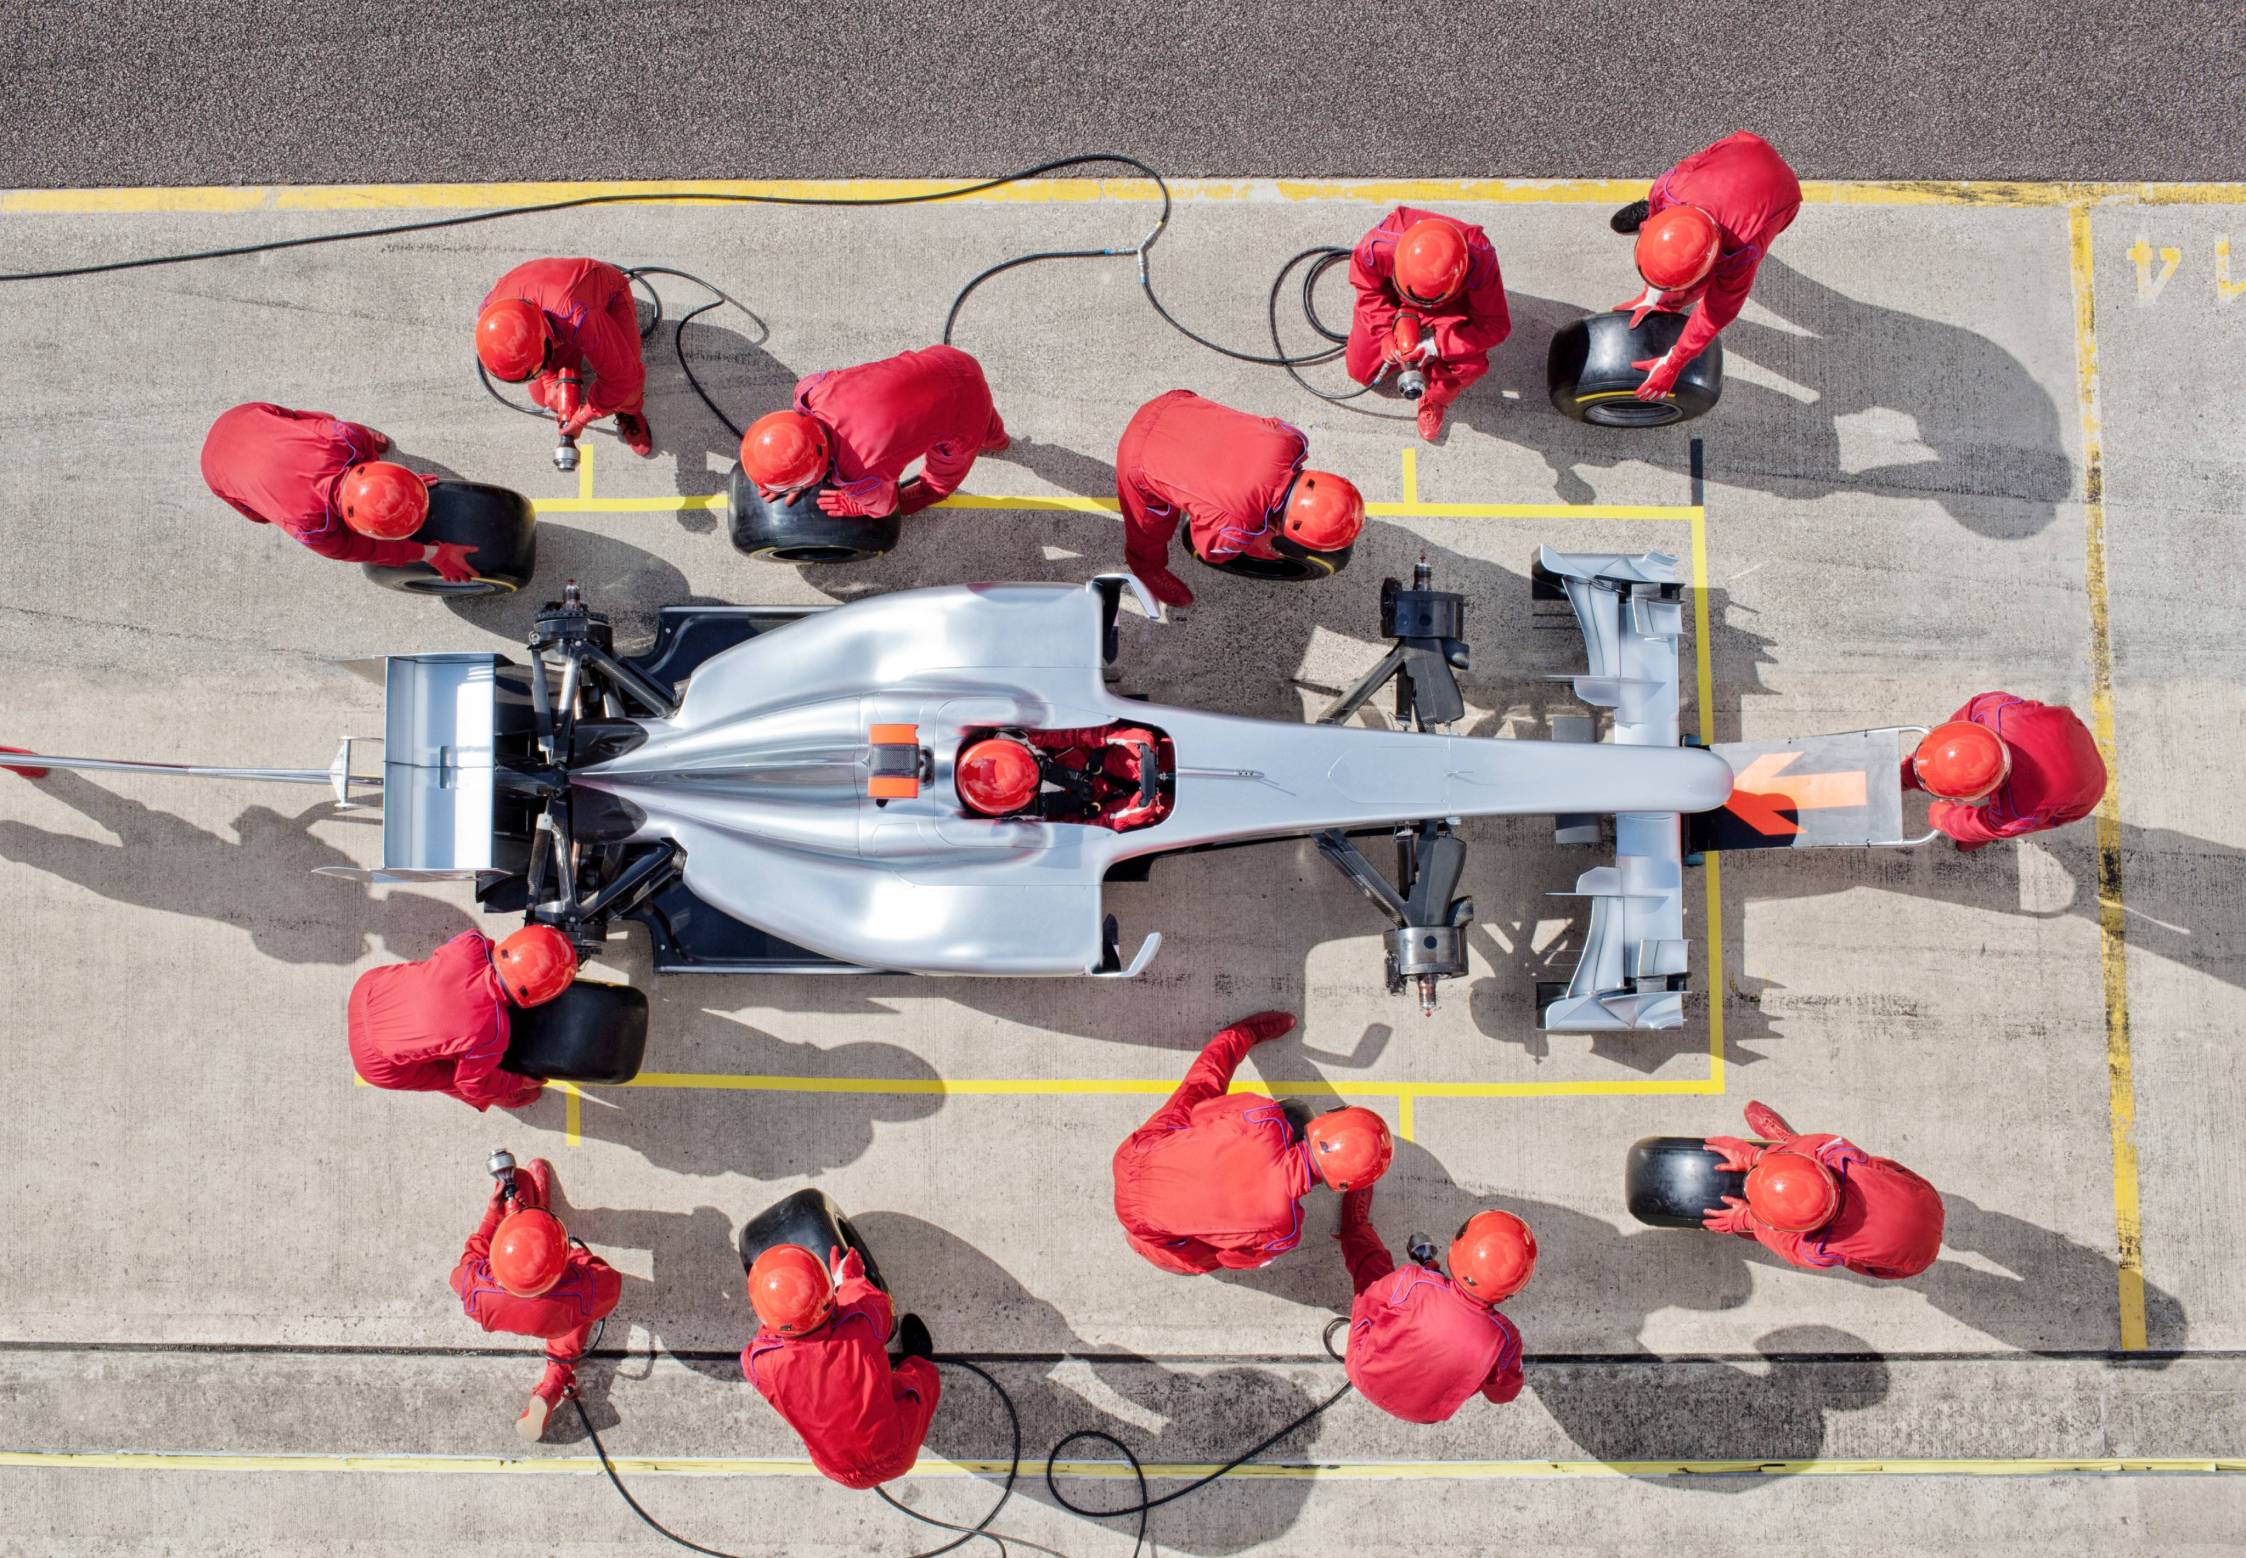 F1 pit crew